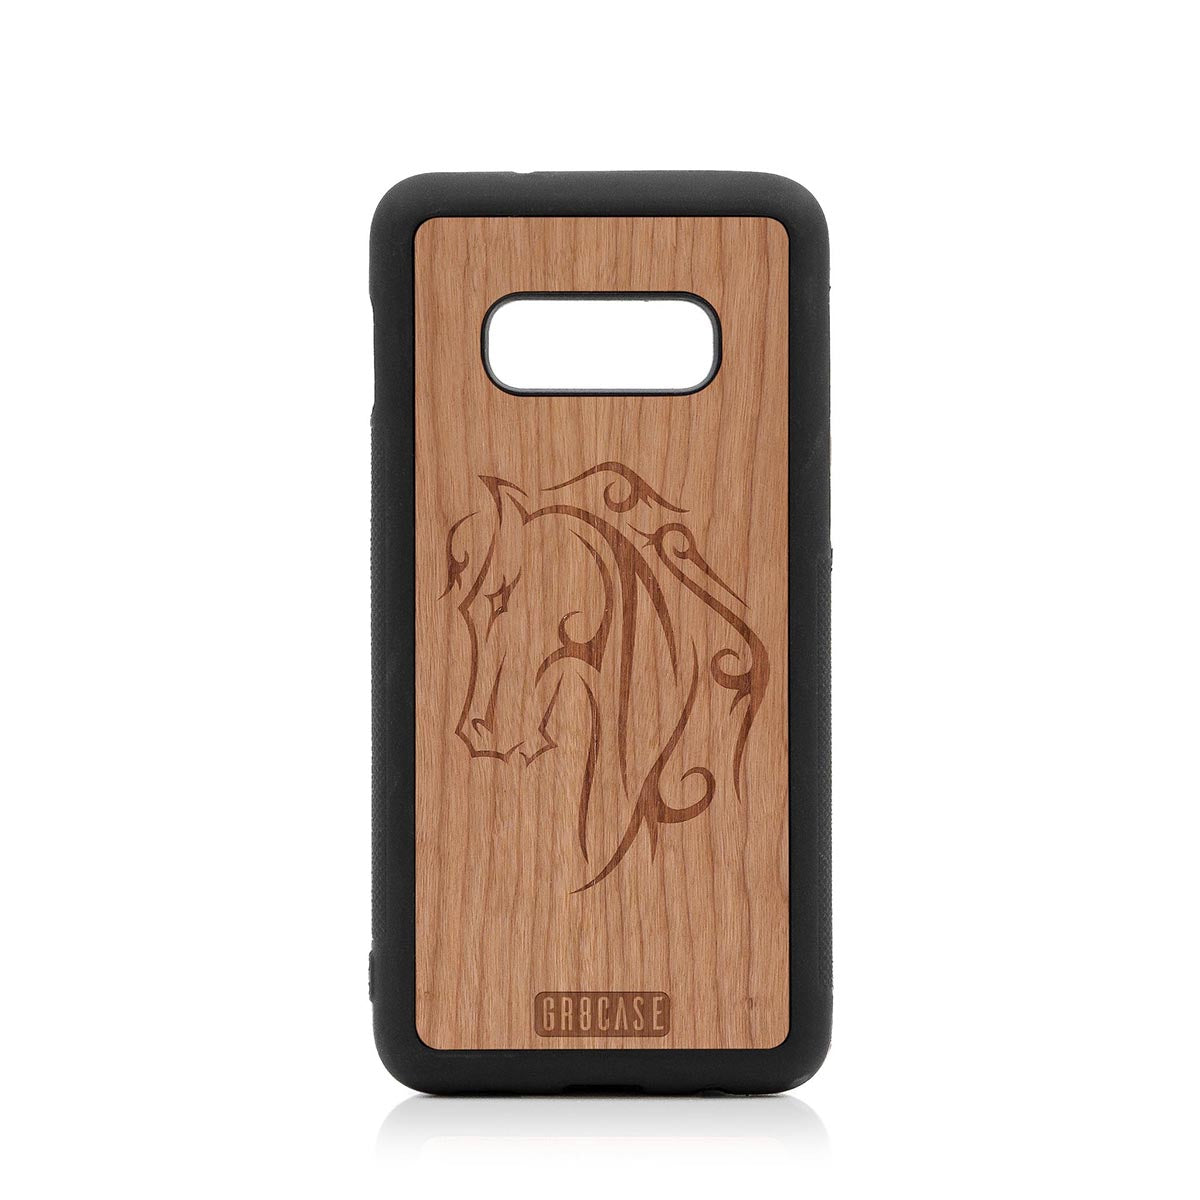 Horse Tattoo Design Wood Case Samsung Galaxy S10E by GR8CASE